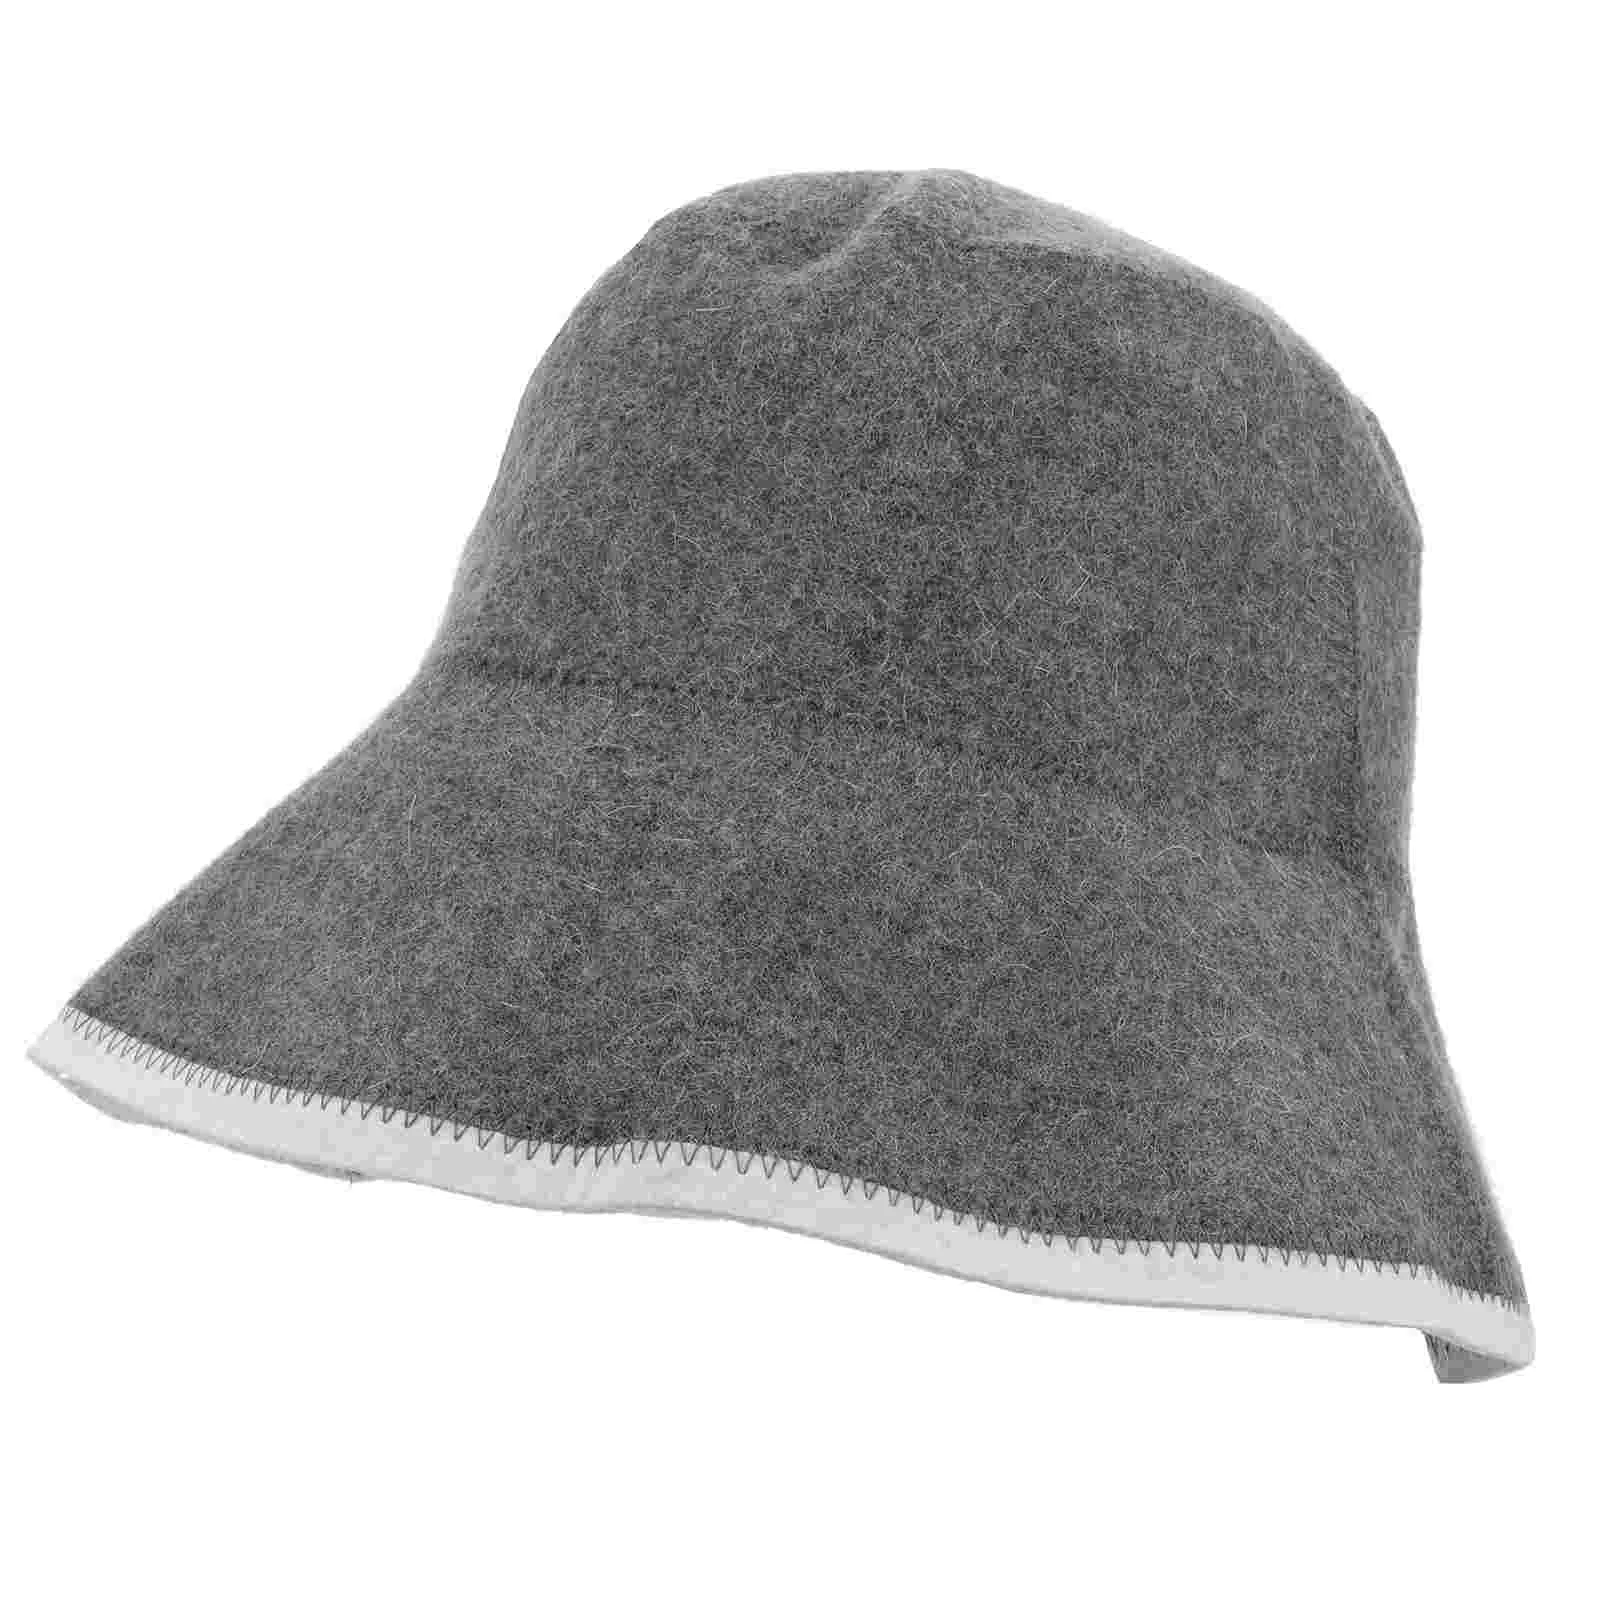 

Russian Sauna Hat for Men Russian Hats Portable Caps Shower Accessories Felt Breathable